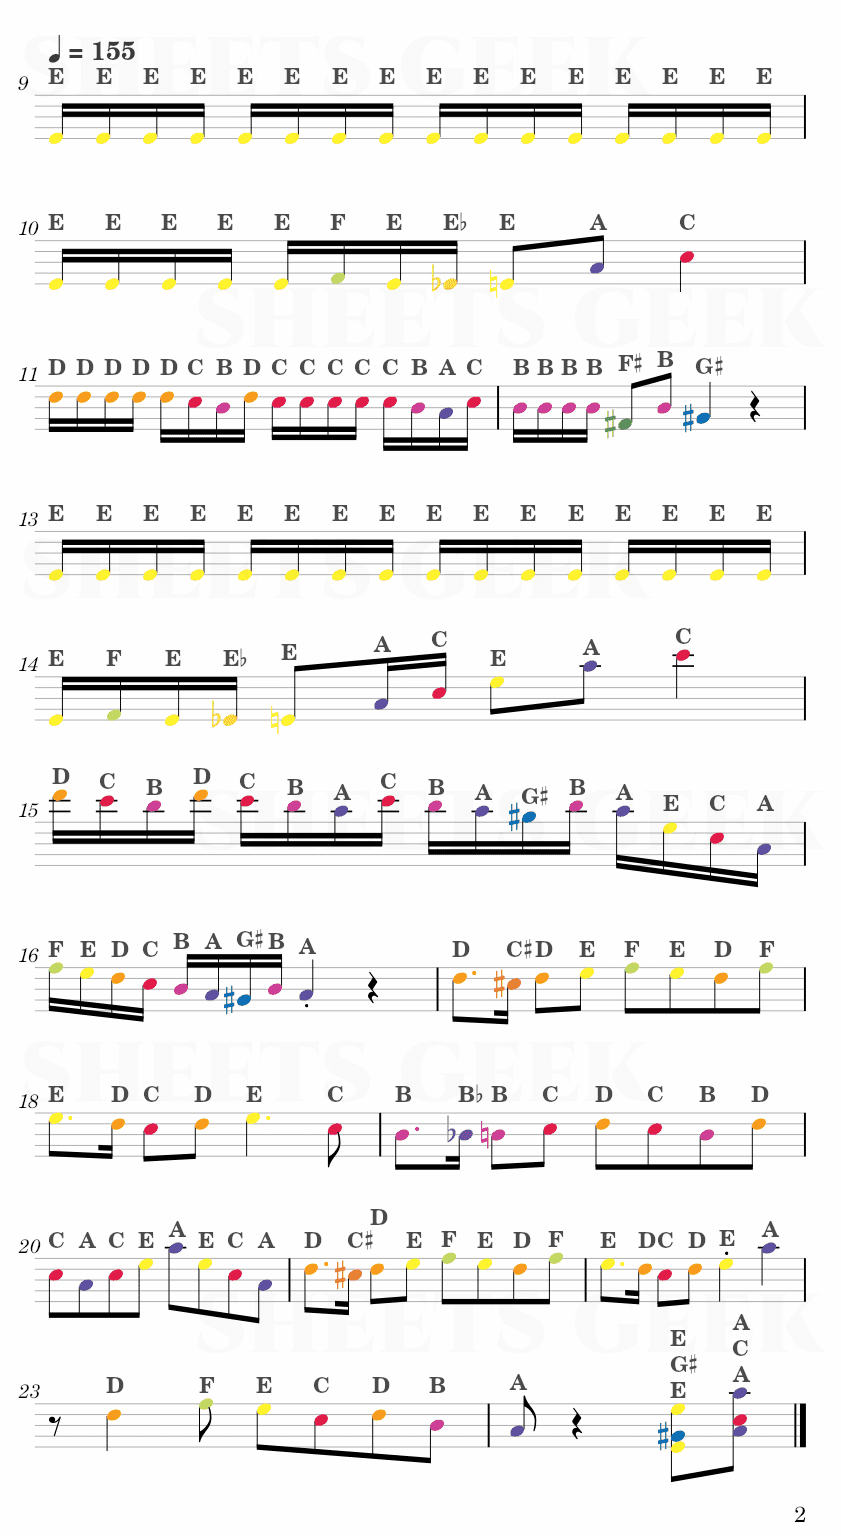 Rush E - Sheet Music Boss Easy Sheet Music Free for piano, keyboard, flute, violin, sax, cello page 2